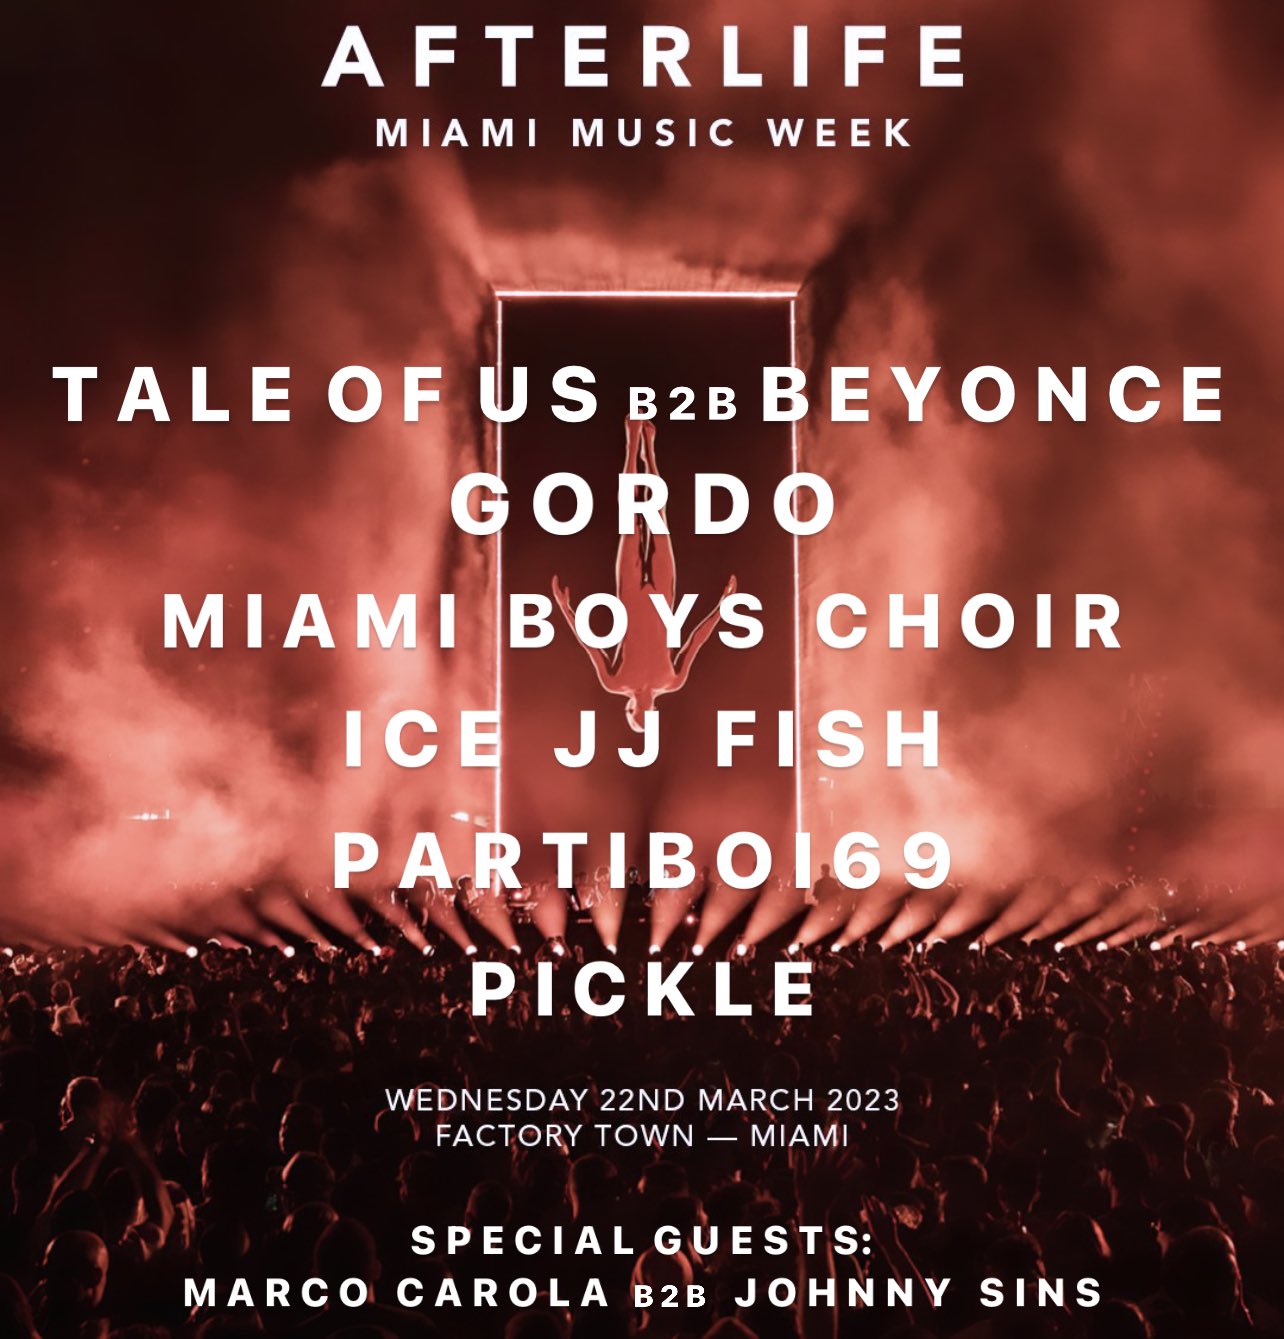 Afterlife Miami Music Week 2023